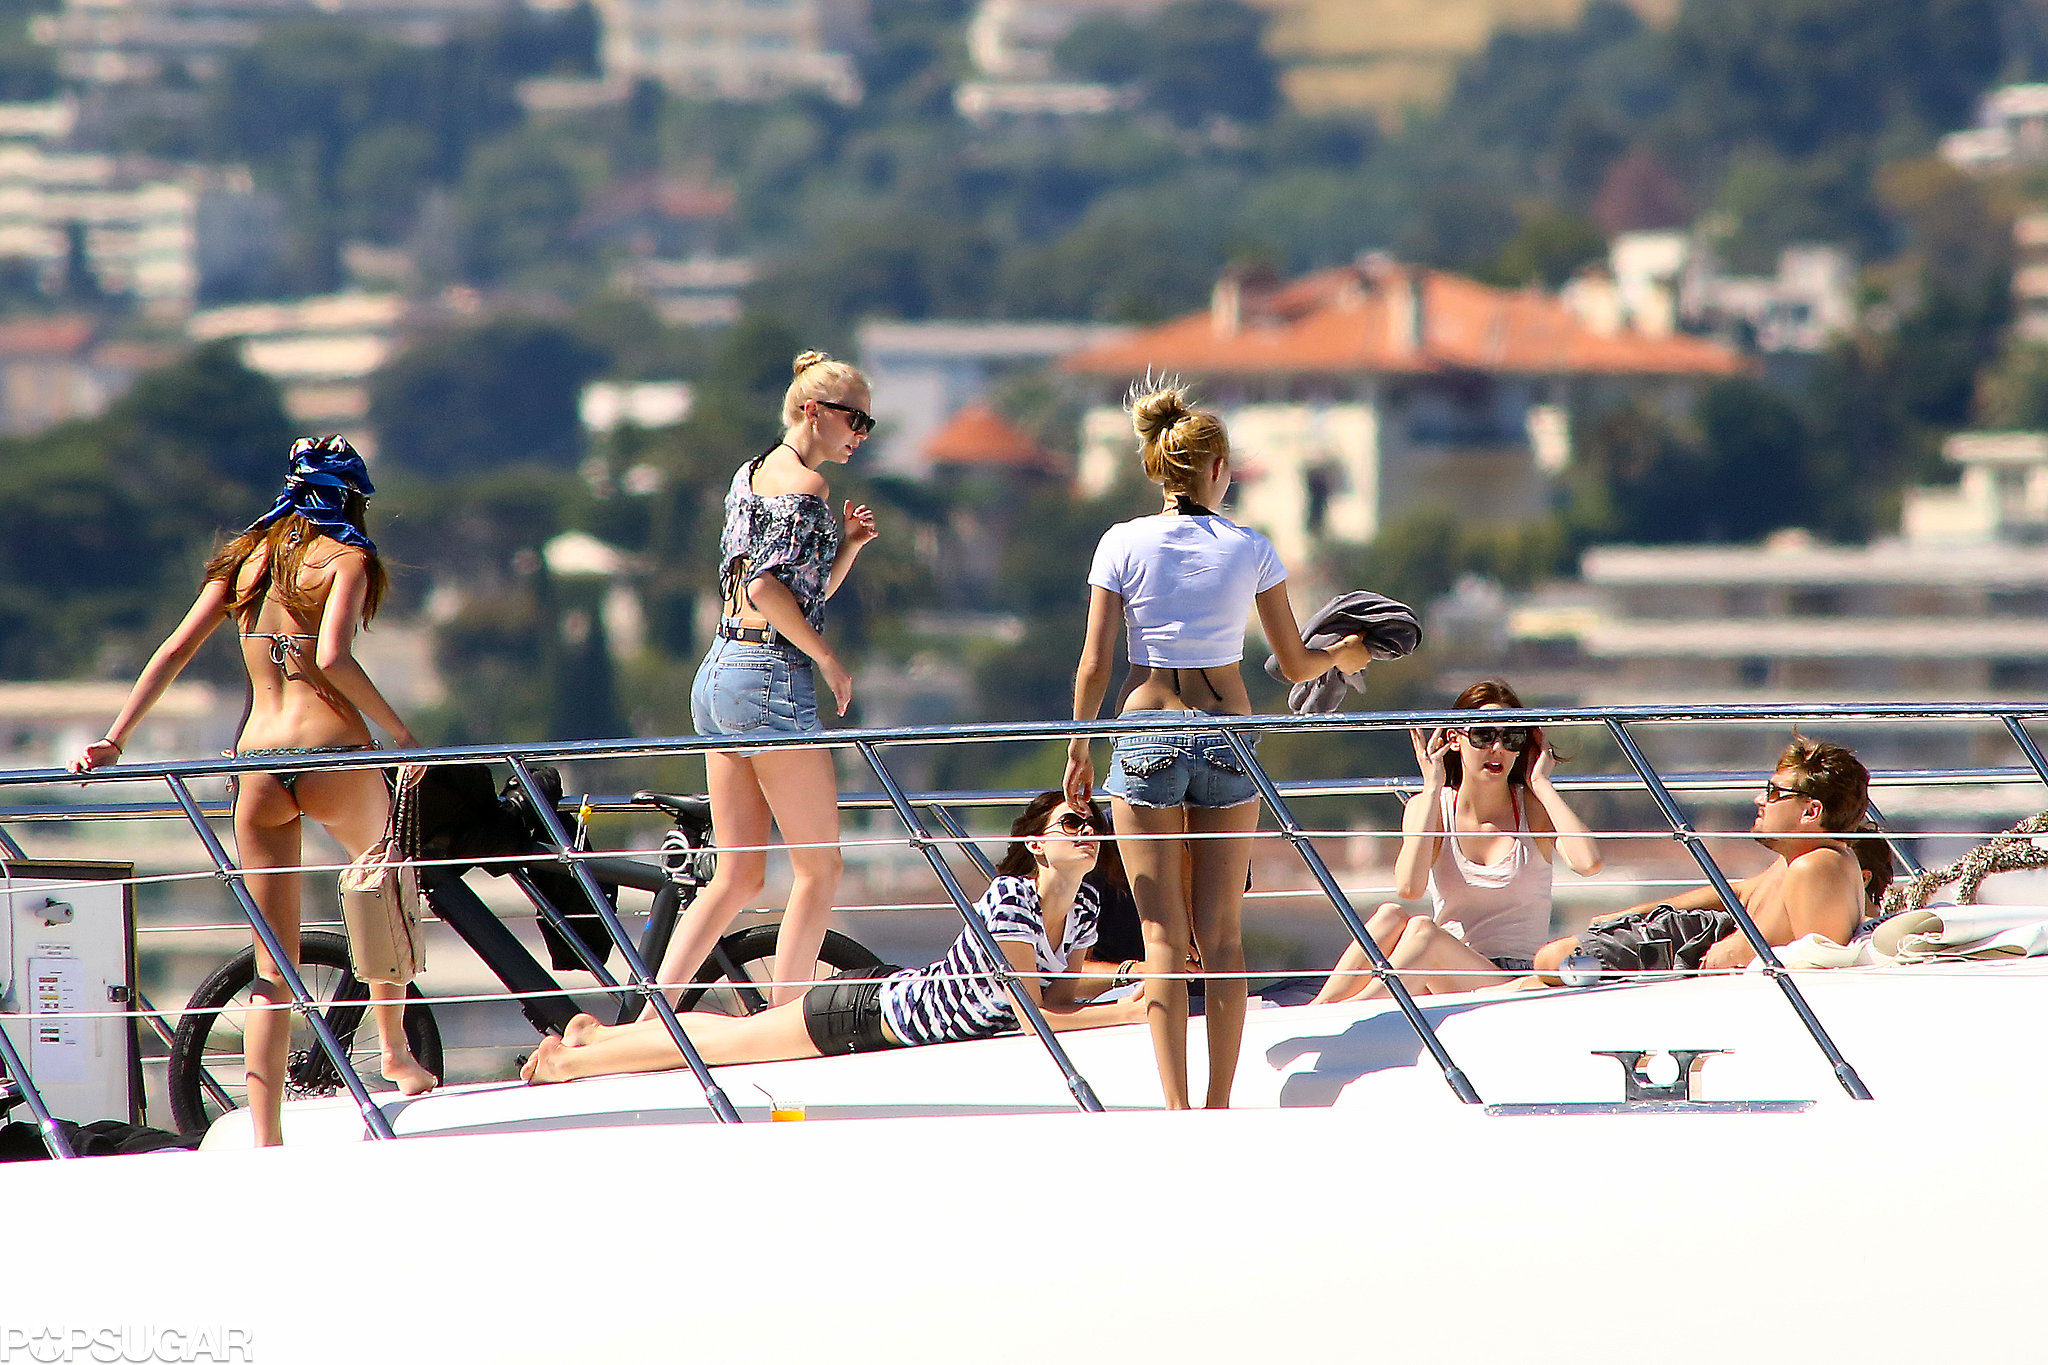 Leonardo-DiCaprio-surrounded-bevy-women-yacht-day.jpg